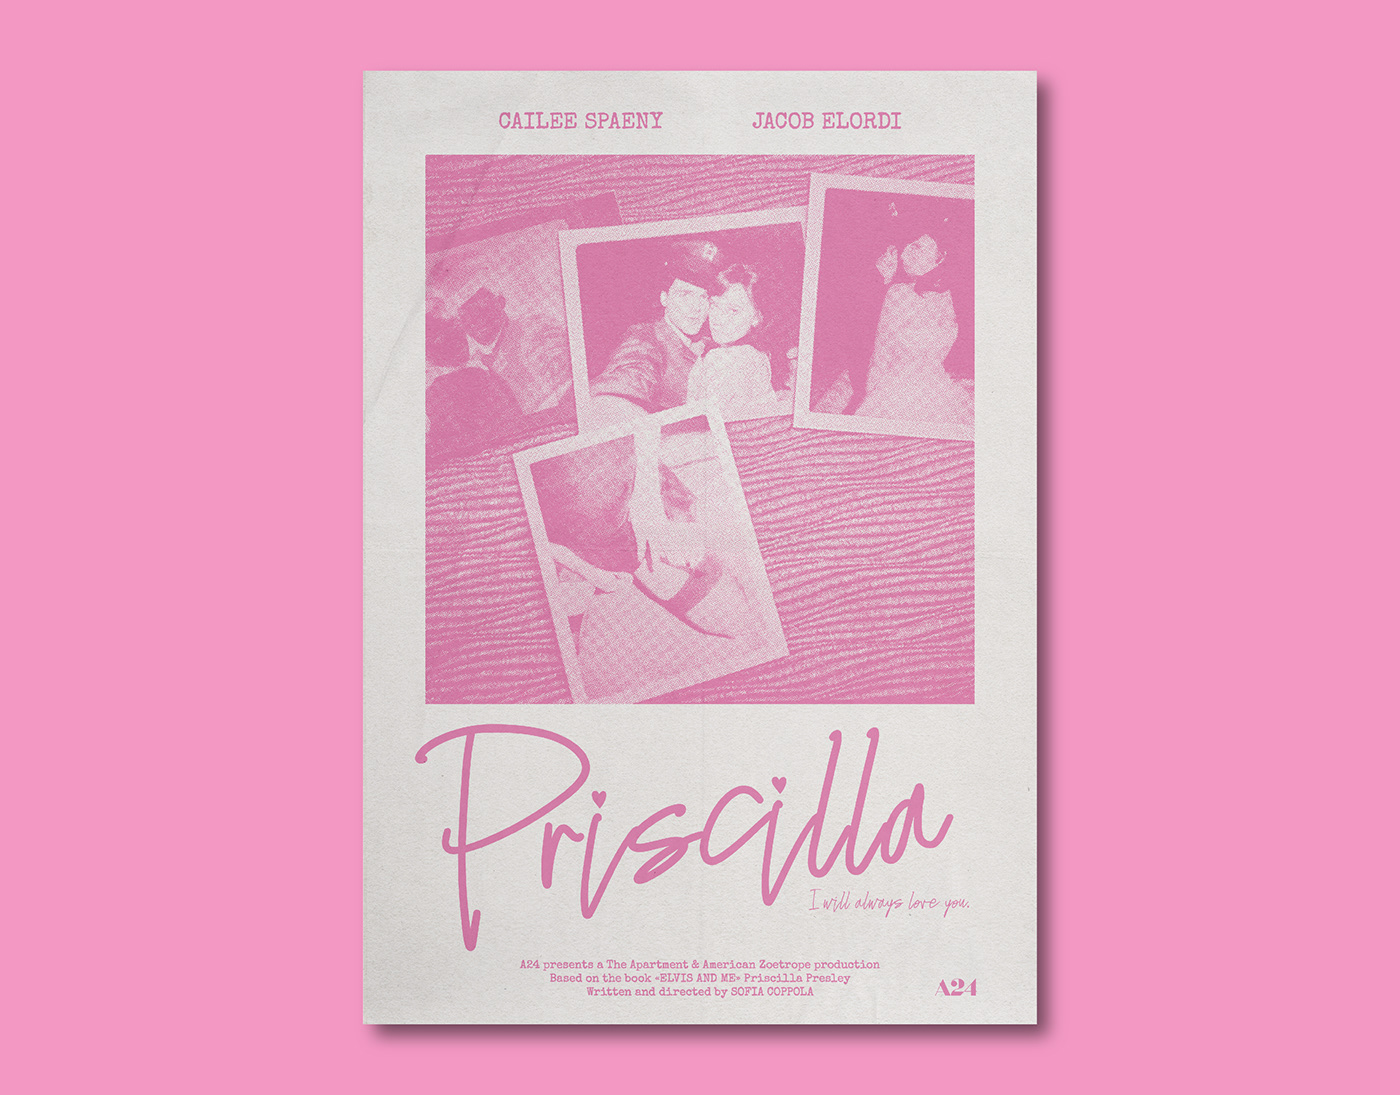 poster design movie elvis presley music Rock And Roll vintage priscilla sofia coppola